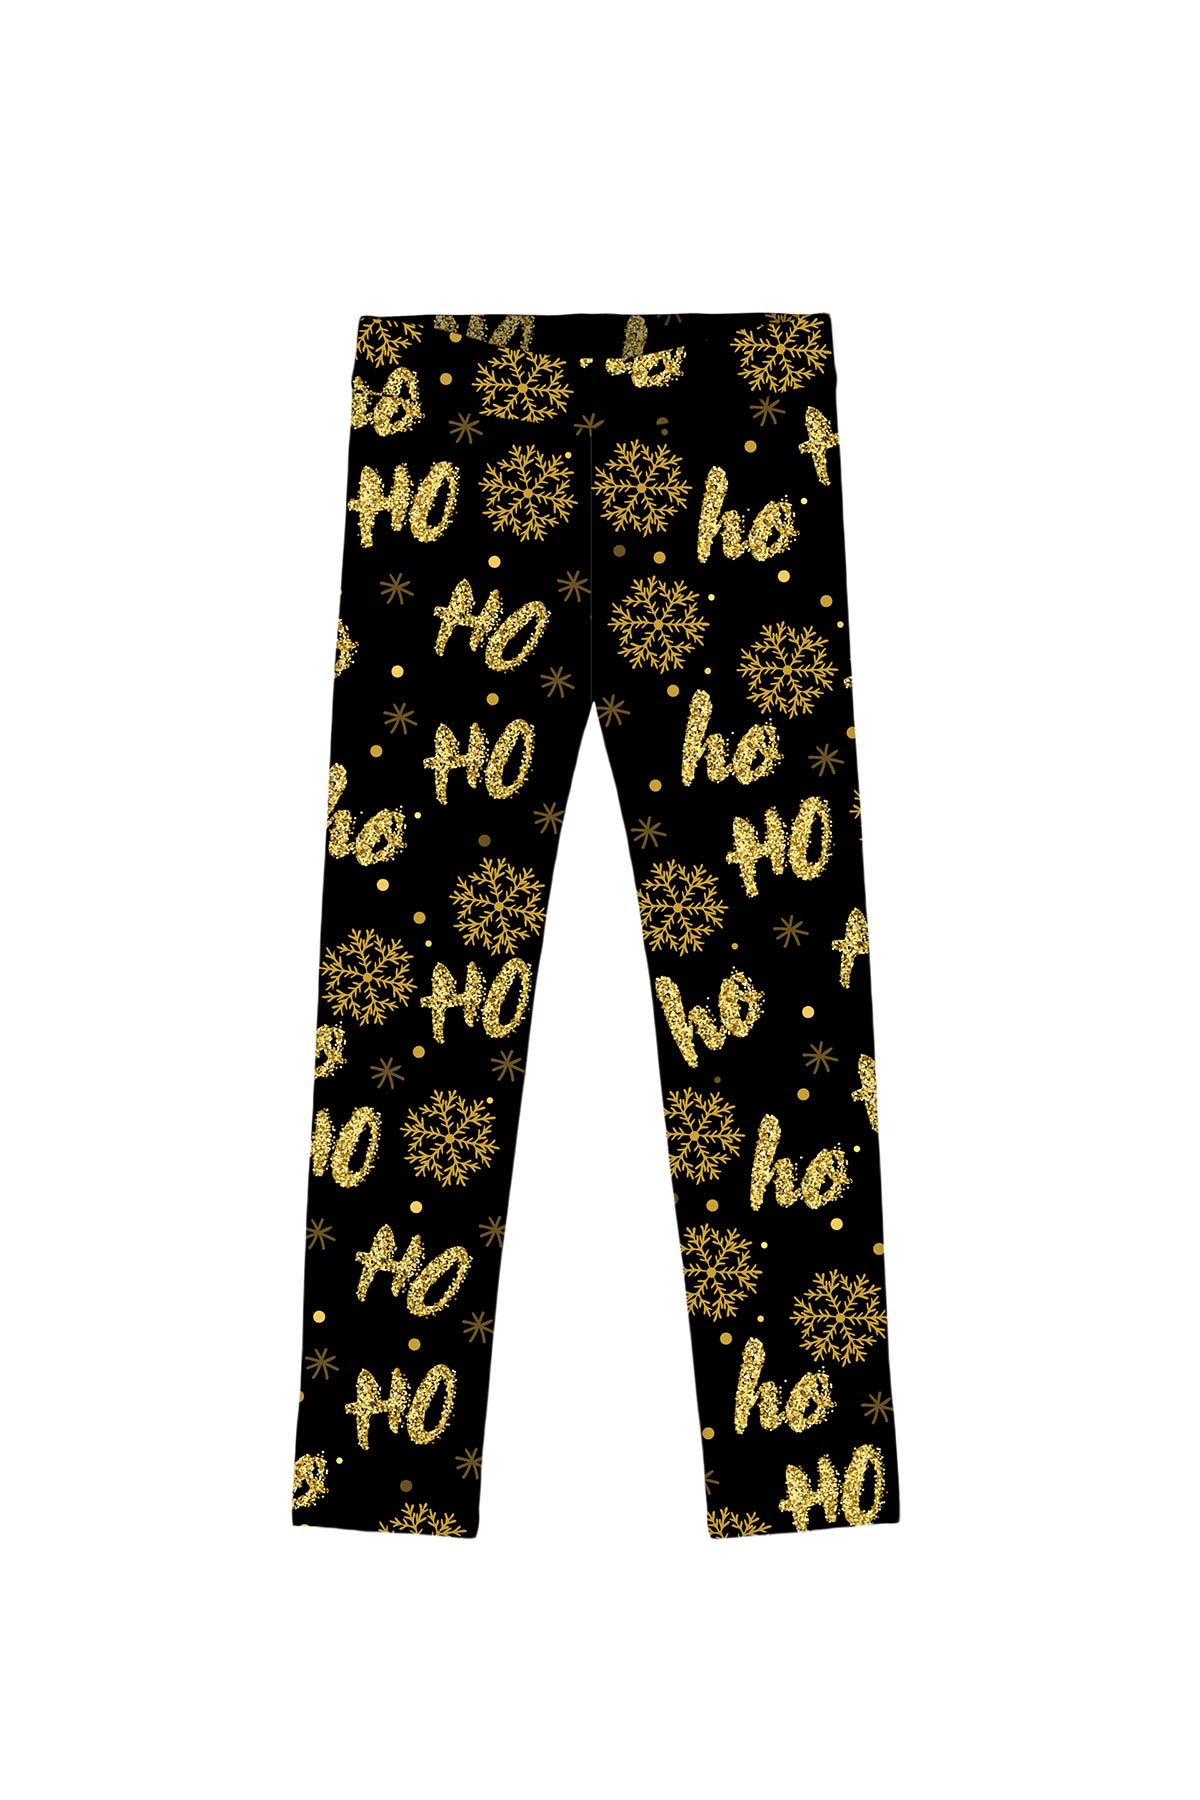 Hohoho Gold Lucy Black Glittering Cute Winter Print Leggings - Girls - Pineapple Clothing